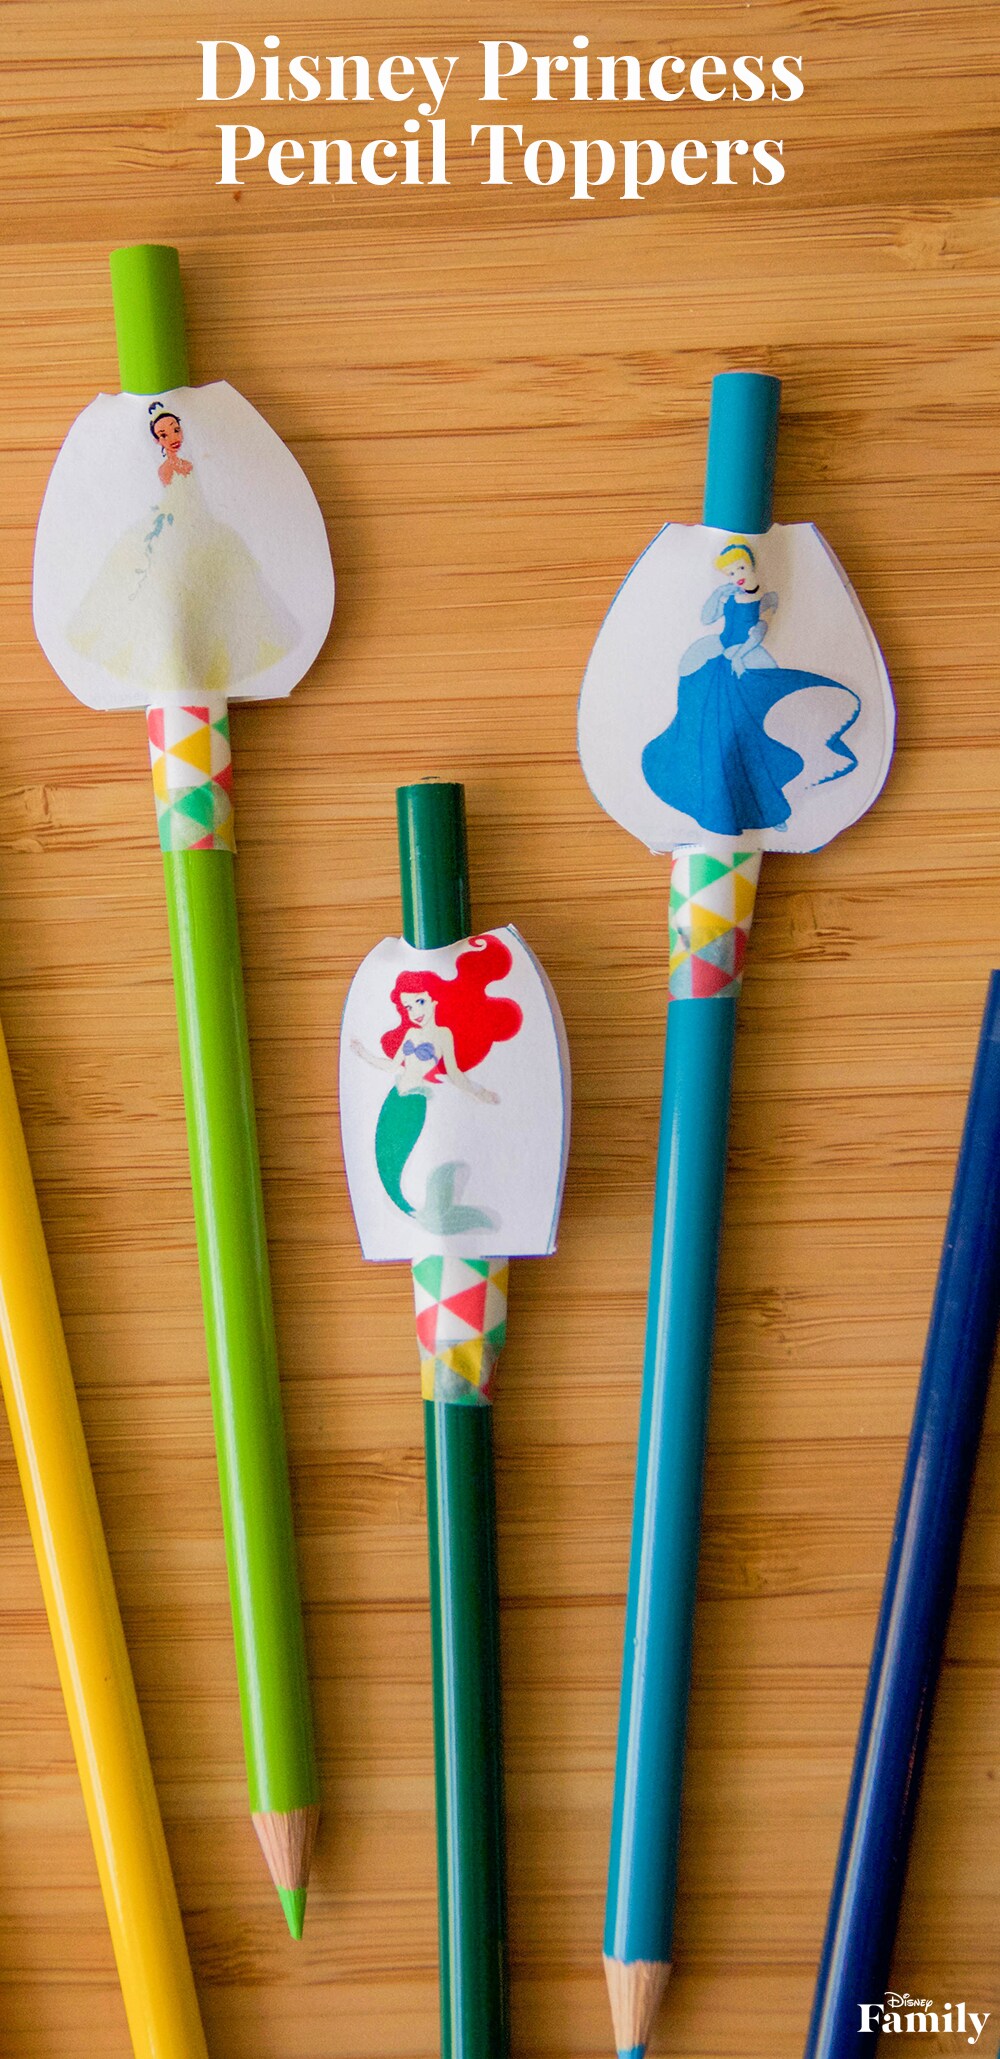 "Disney Princess Pencil Toppers".